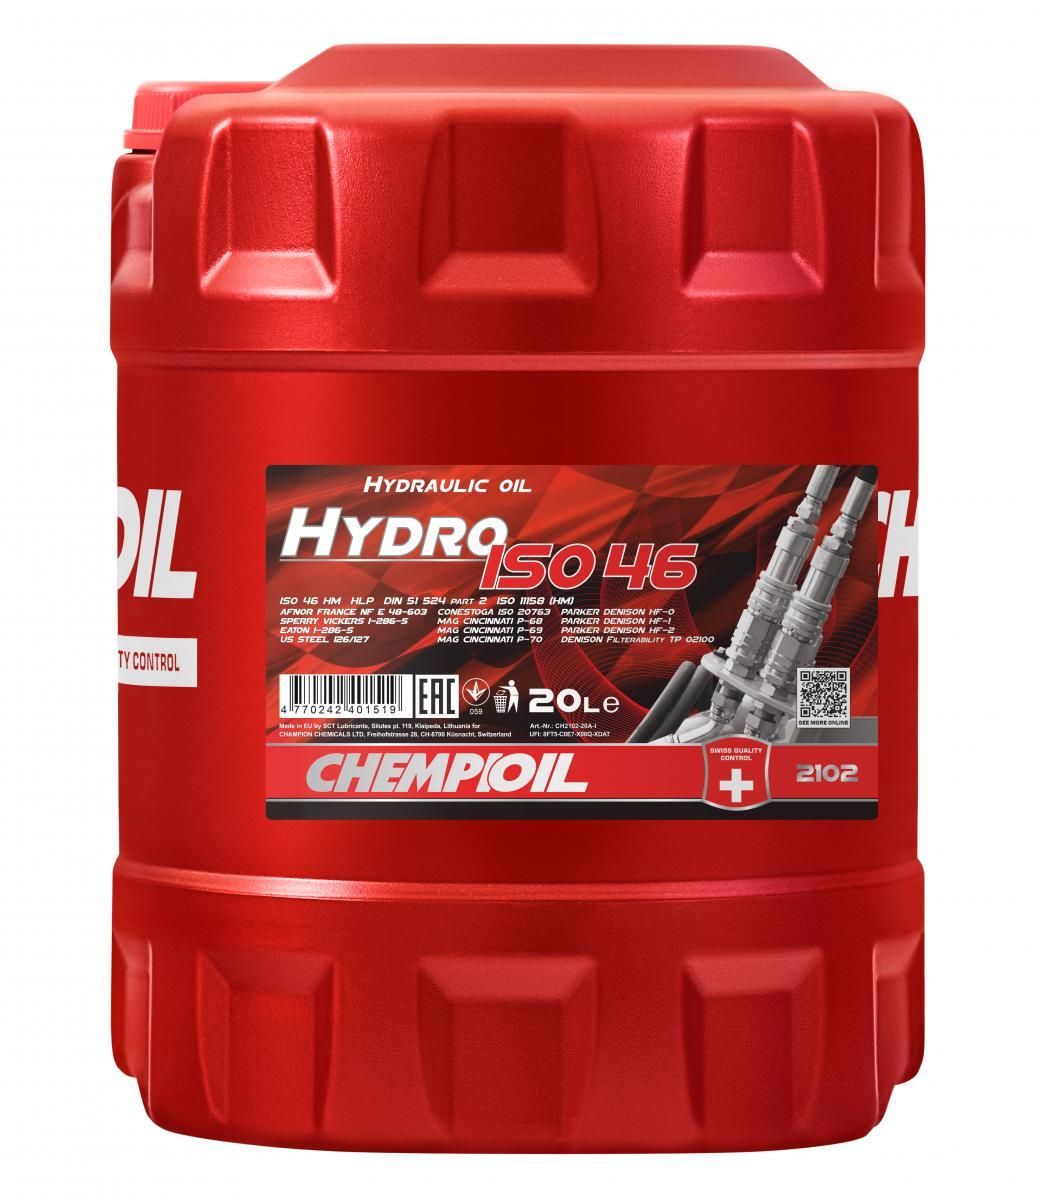 Hydros гидравлическое масло. Chempioil 20l. ISO 46 масло гидравлическое. Гидравлическое масло Hydro HLP 46. Chempioil s4010 60 л.